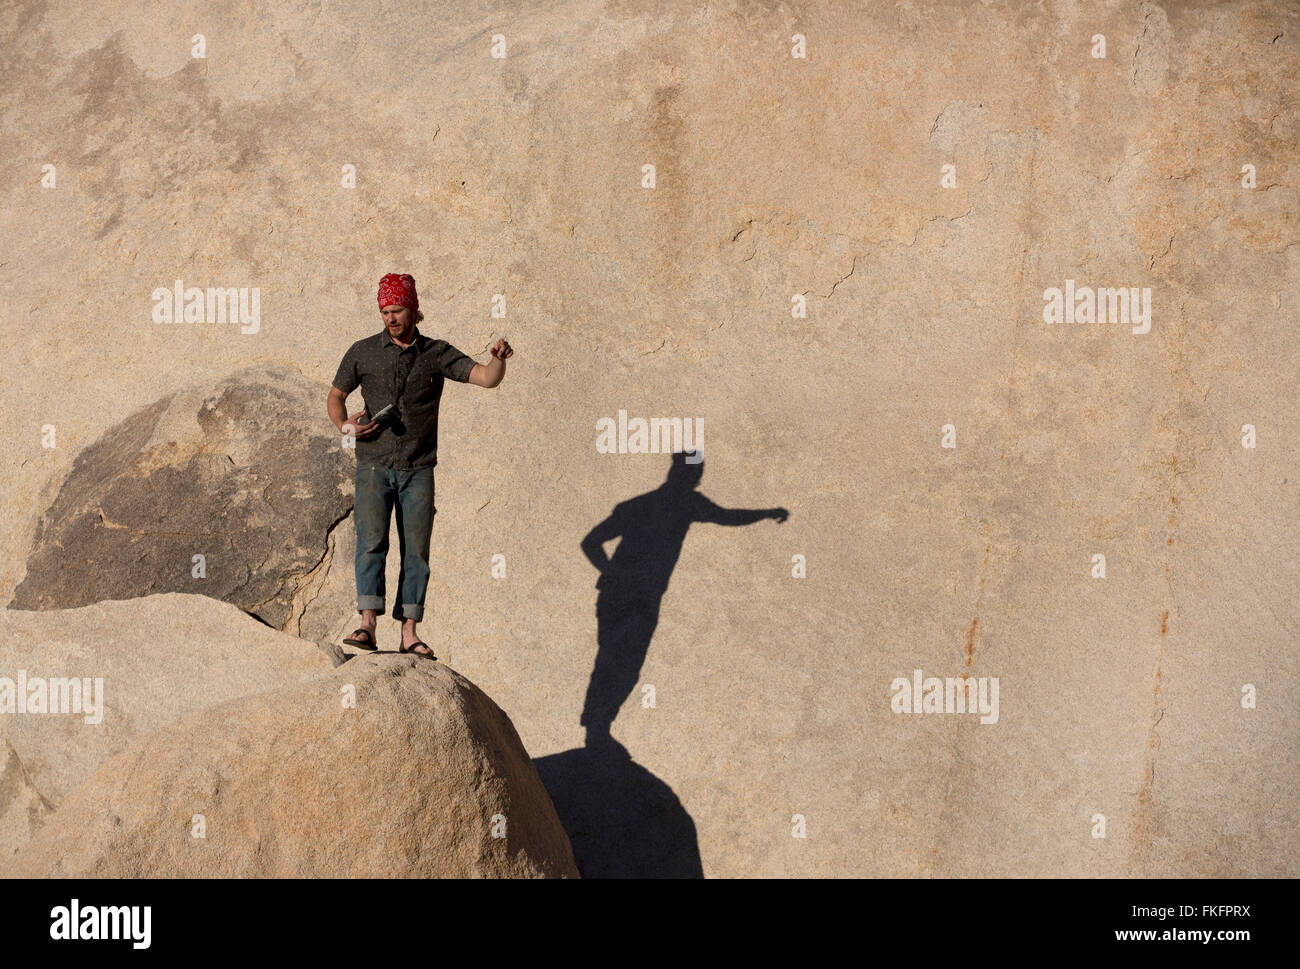 Rock climber at base of cliff, Hidden Valley, Joshua Tree National Park, California, USA Stock Photo